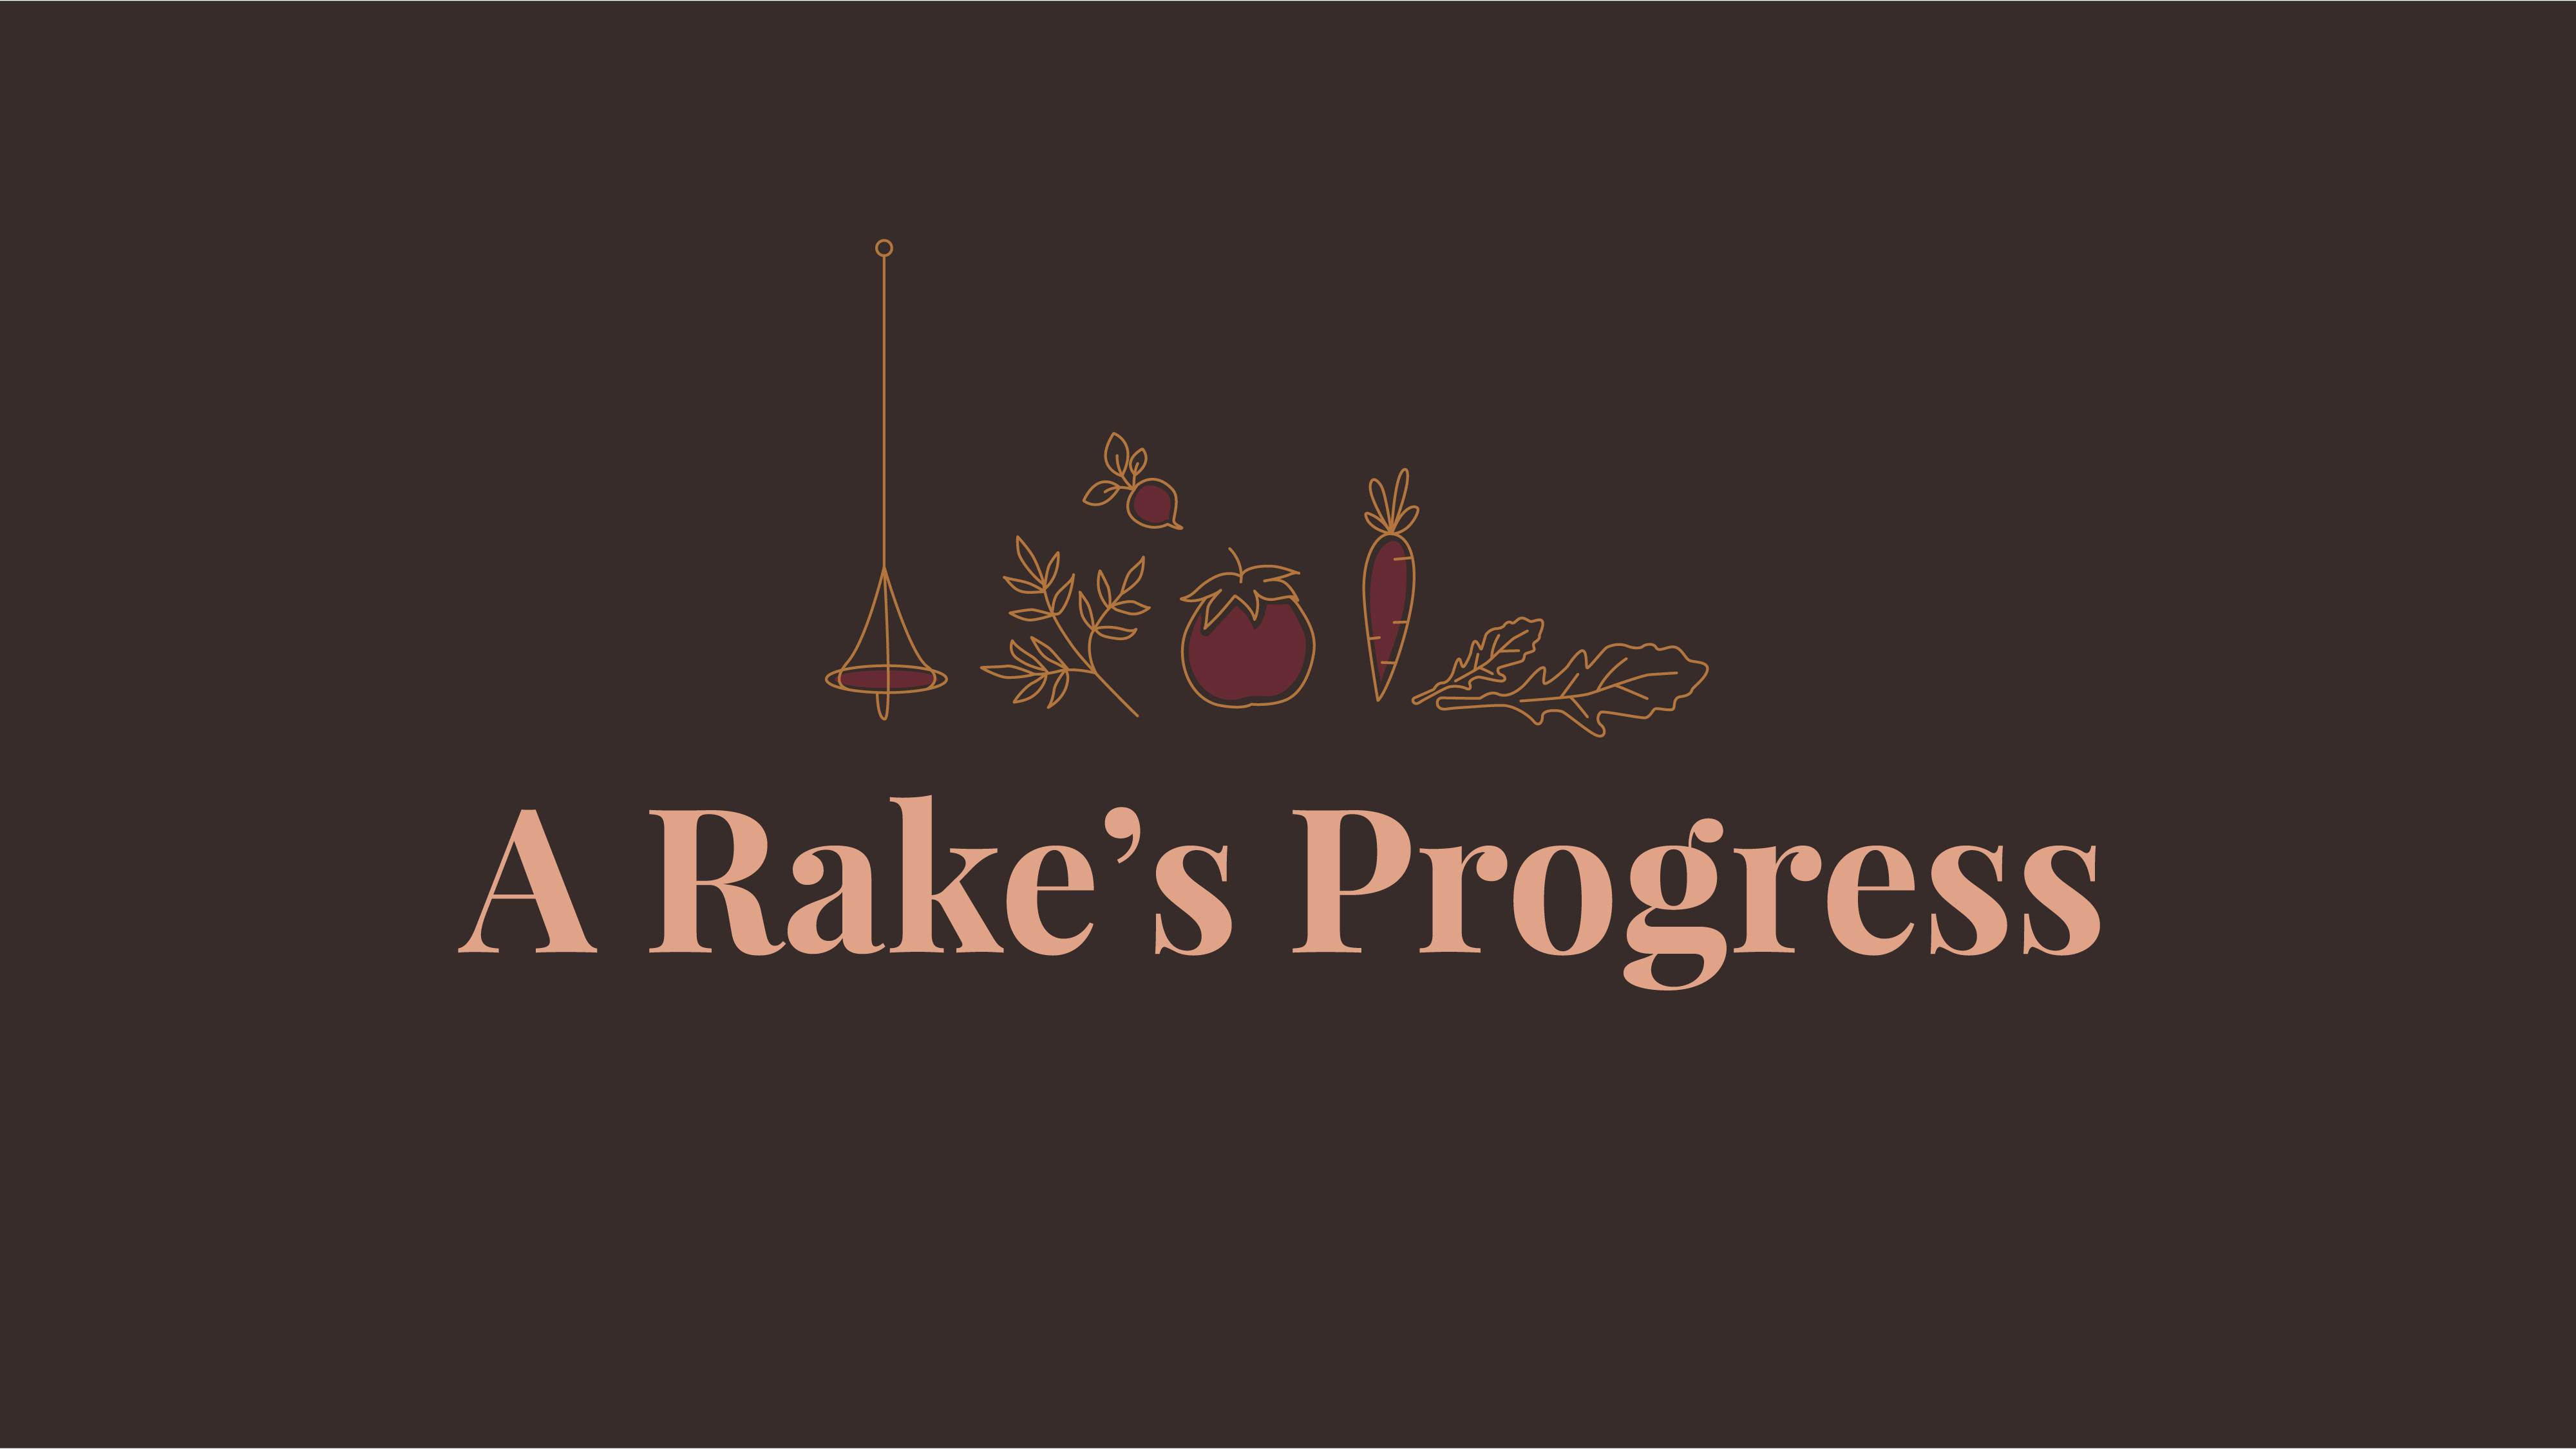 A Rake's Progress